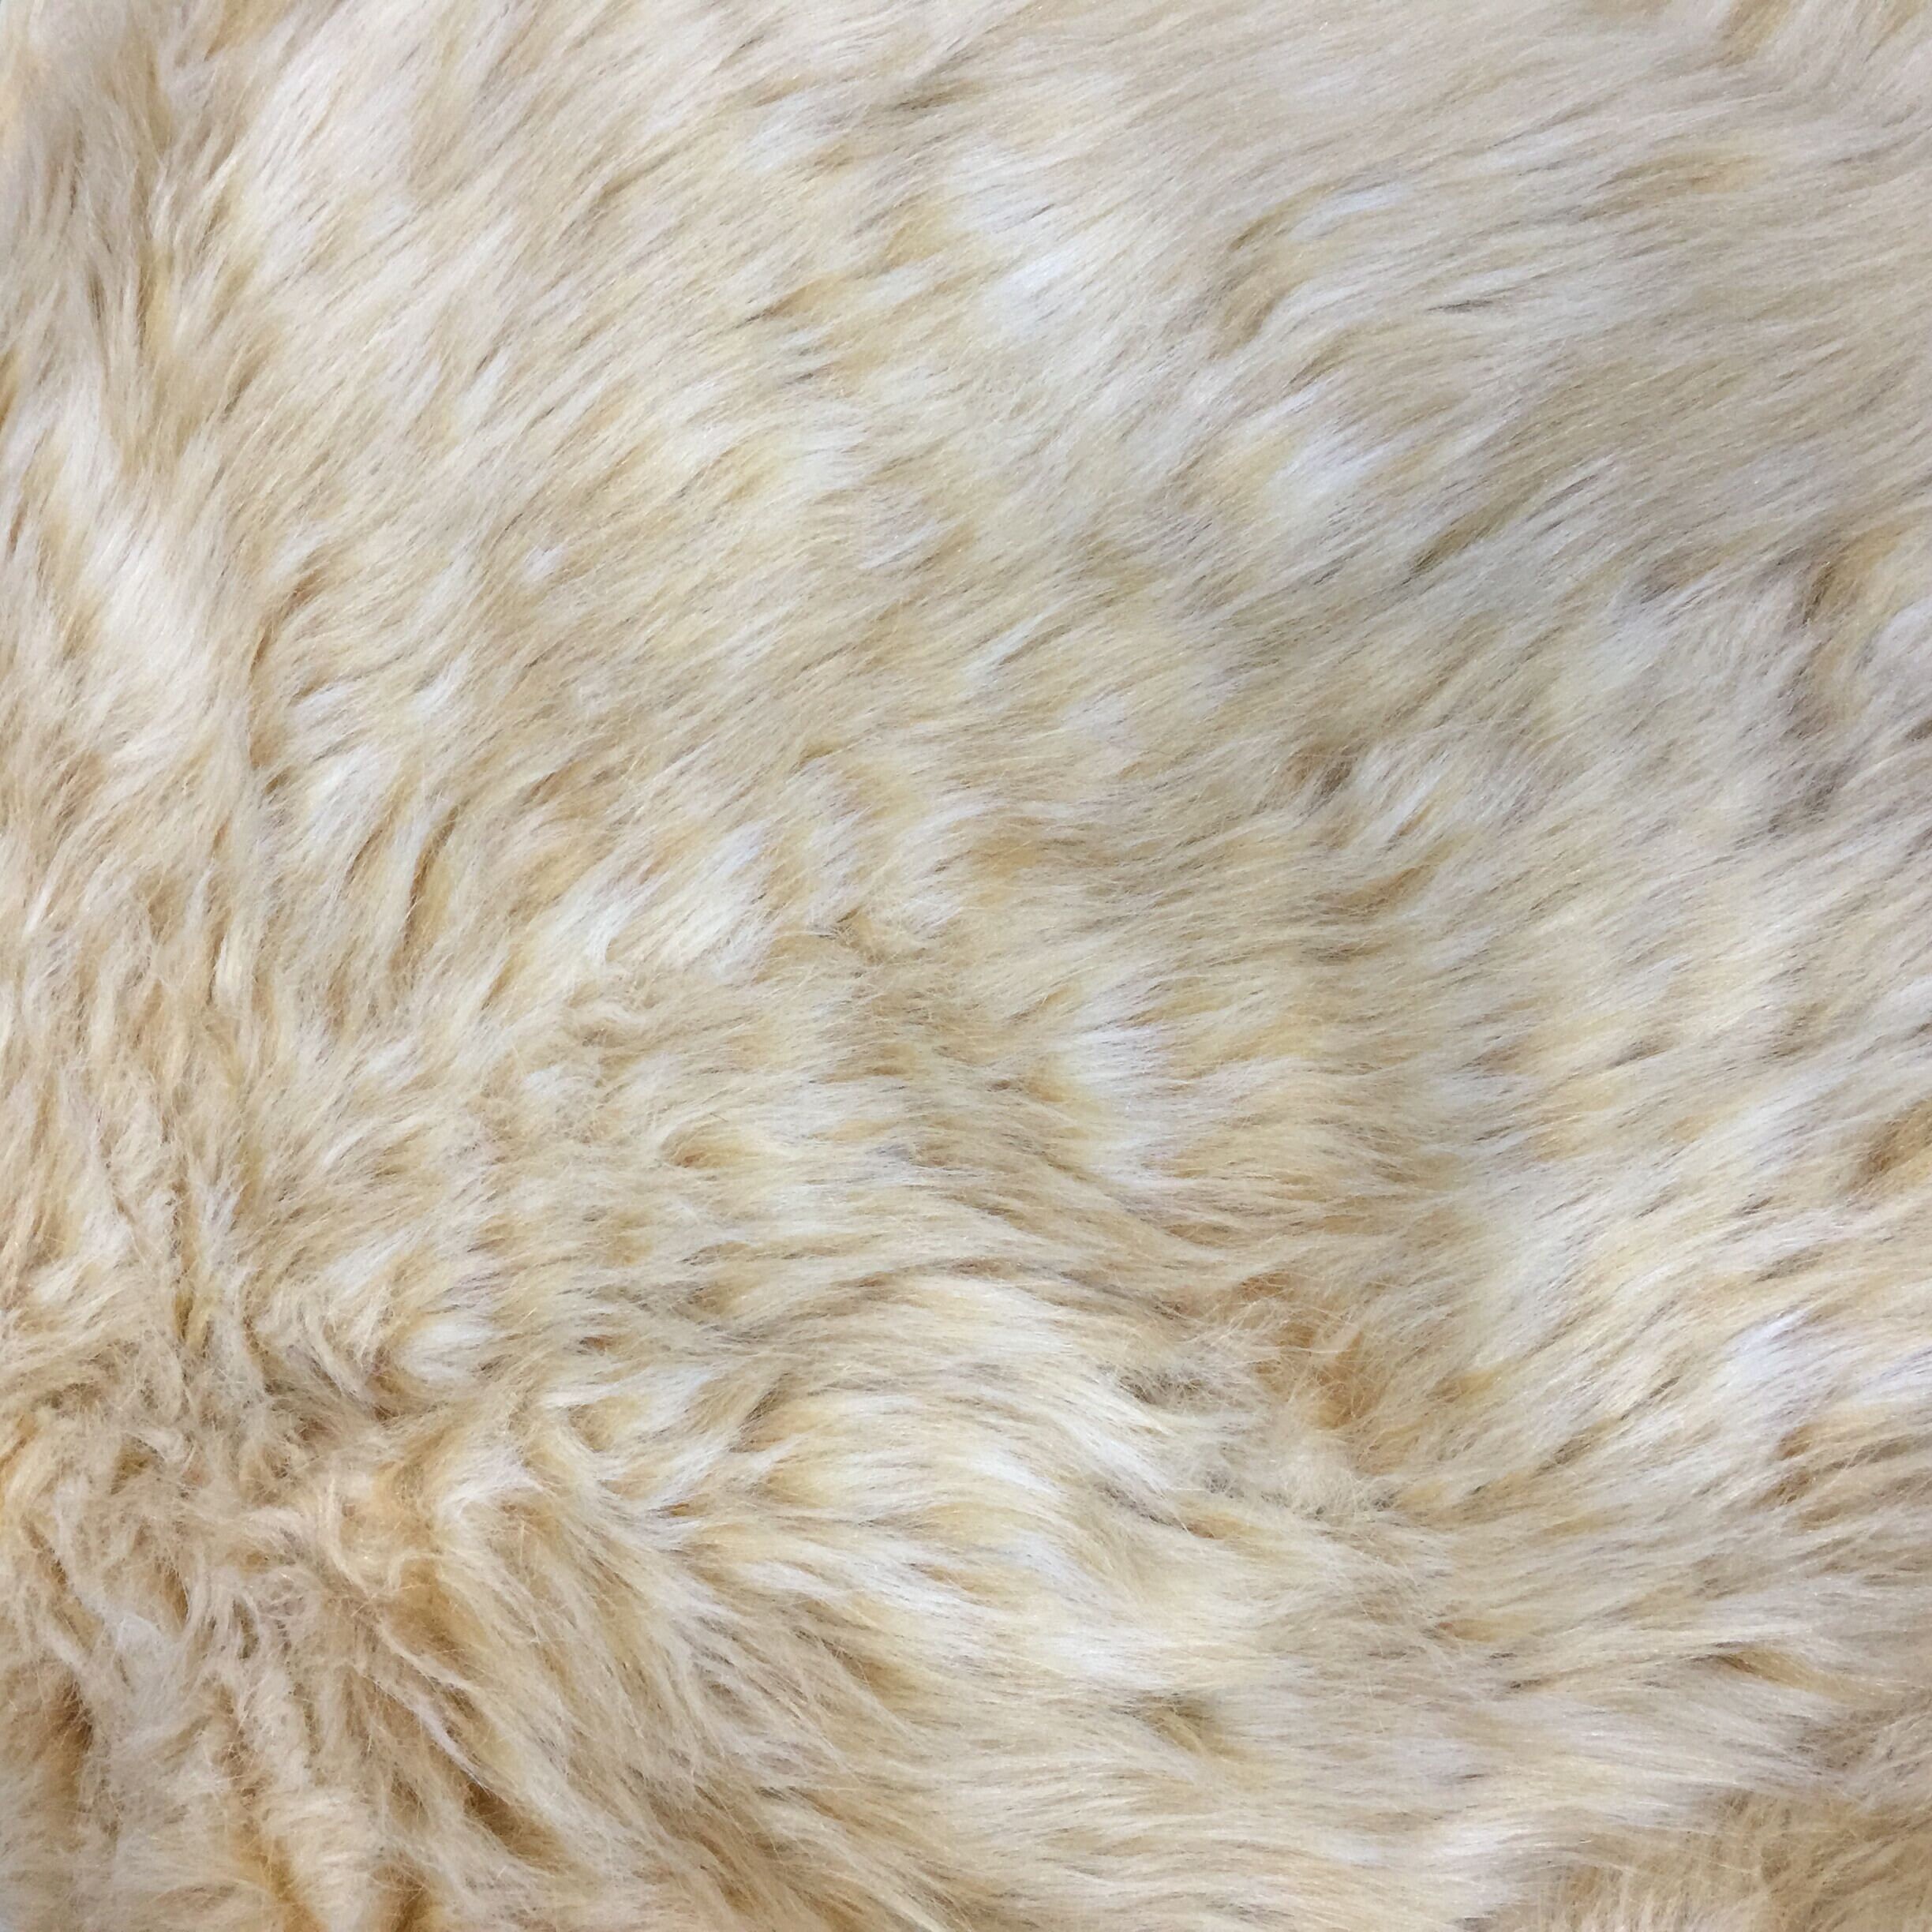 Cat Printsoft Jacquard Faux Furfurry Shaggy Fur Fabricwild - Etsy